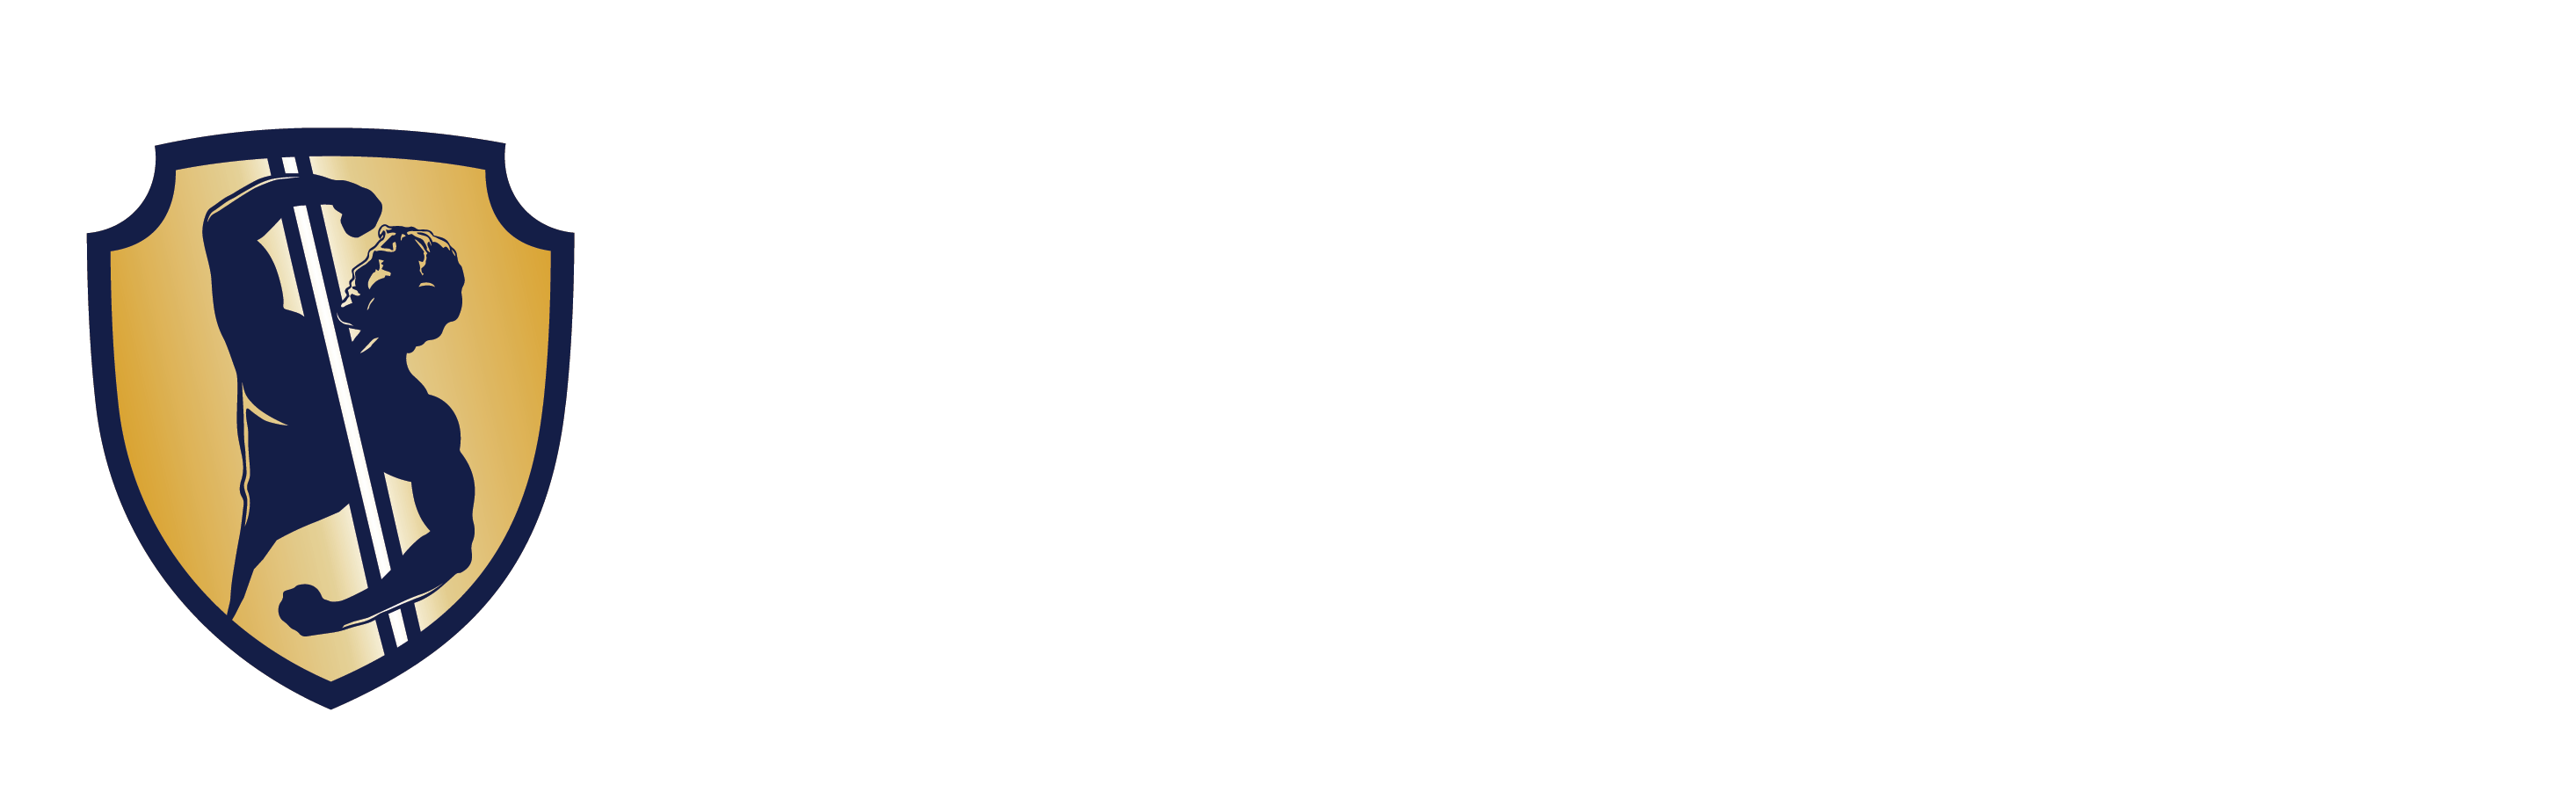 Defenders of Capitalism